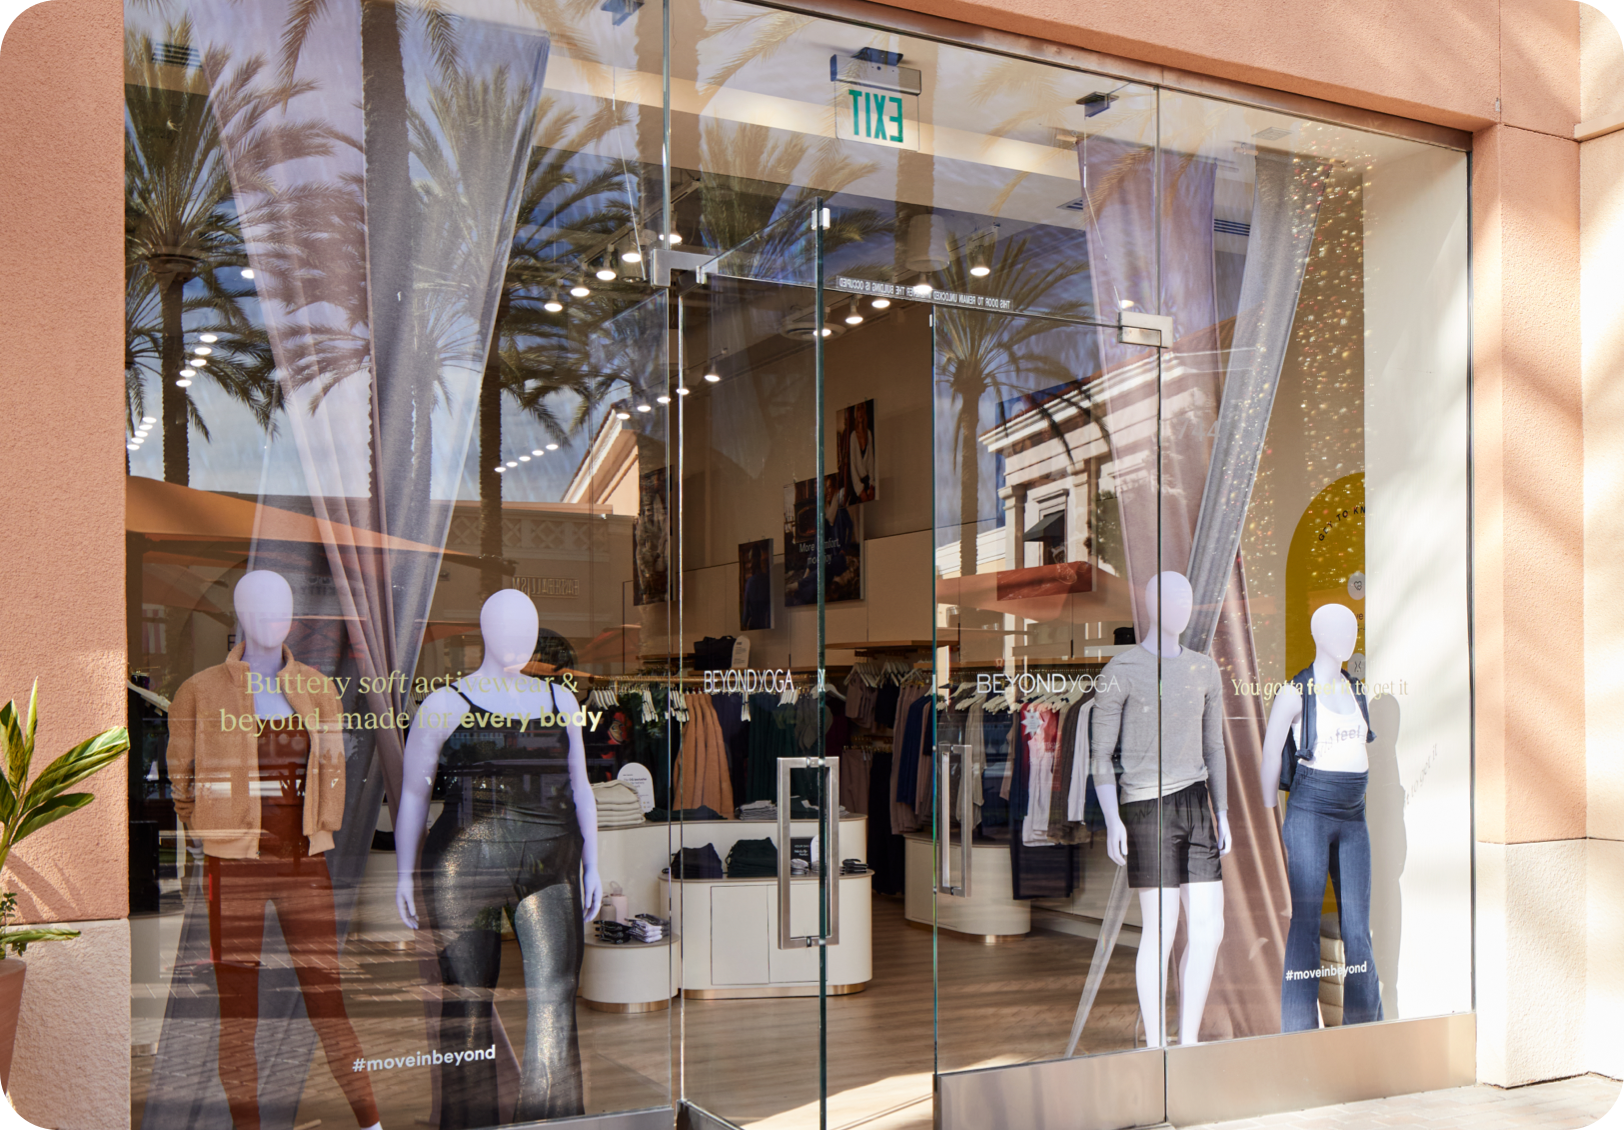 Irvine storefront featuring mannequins 